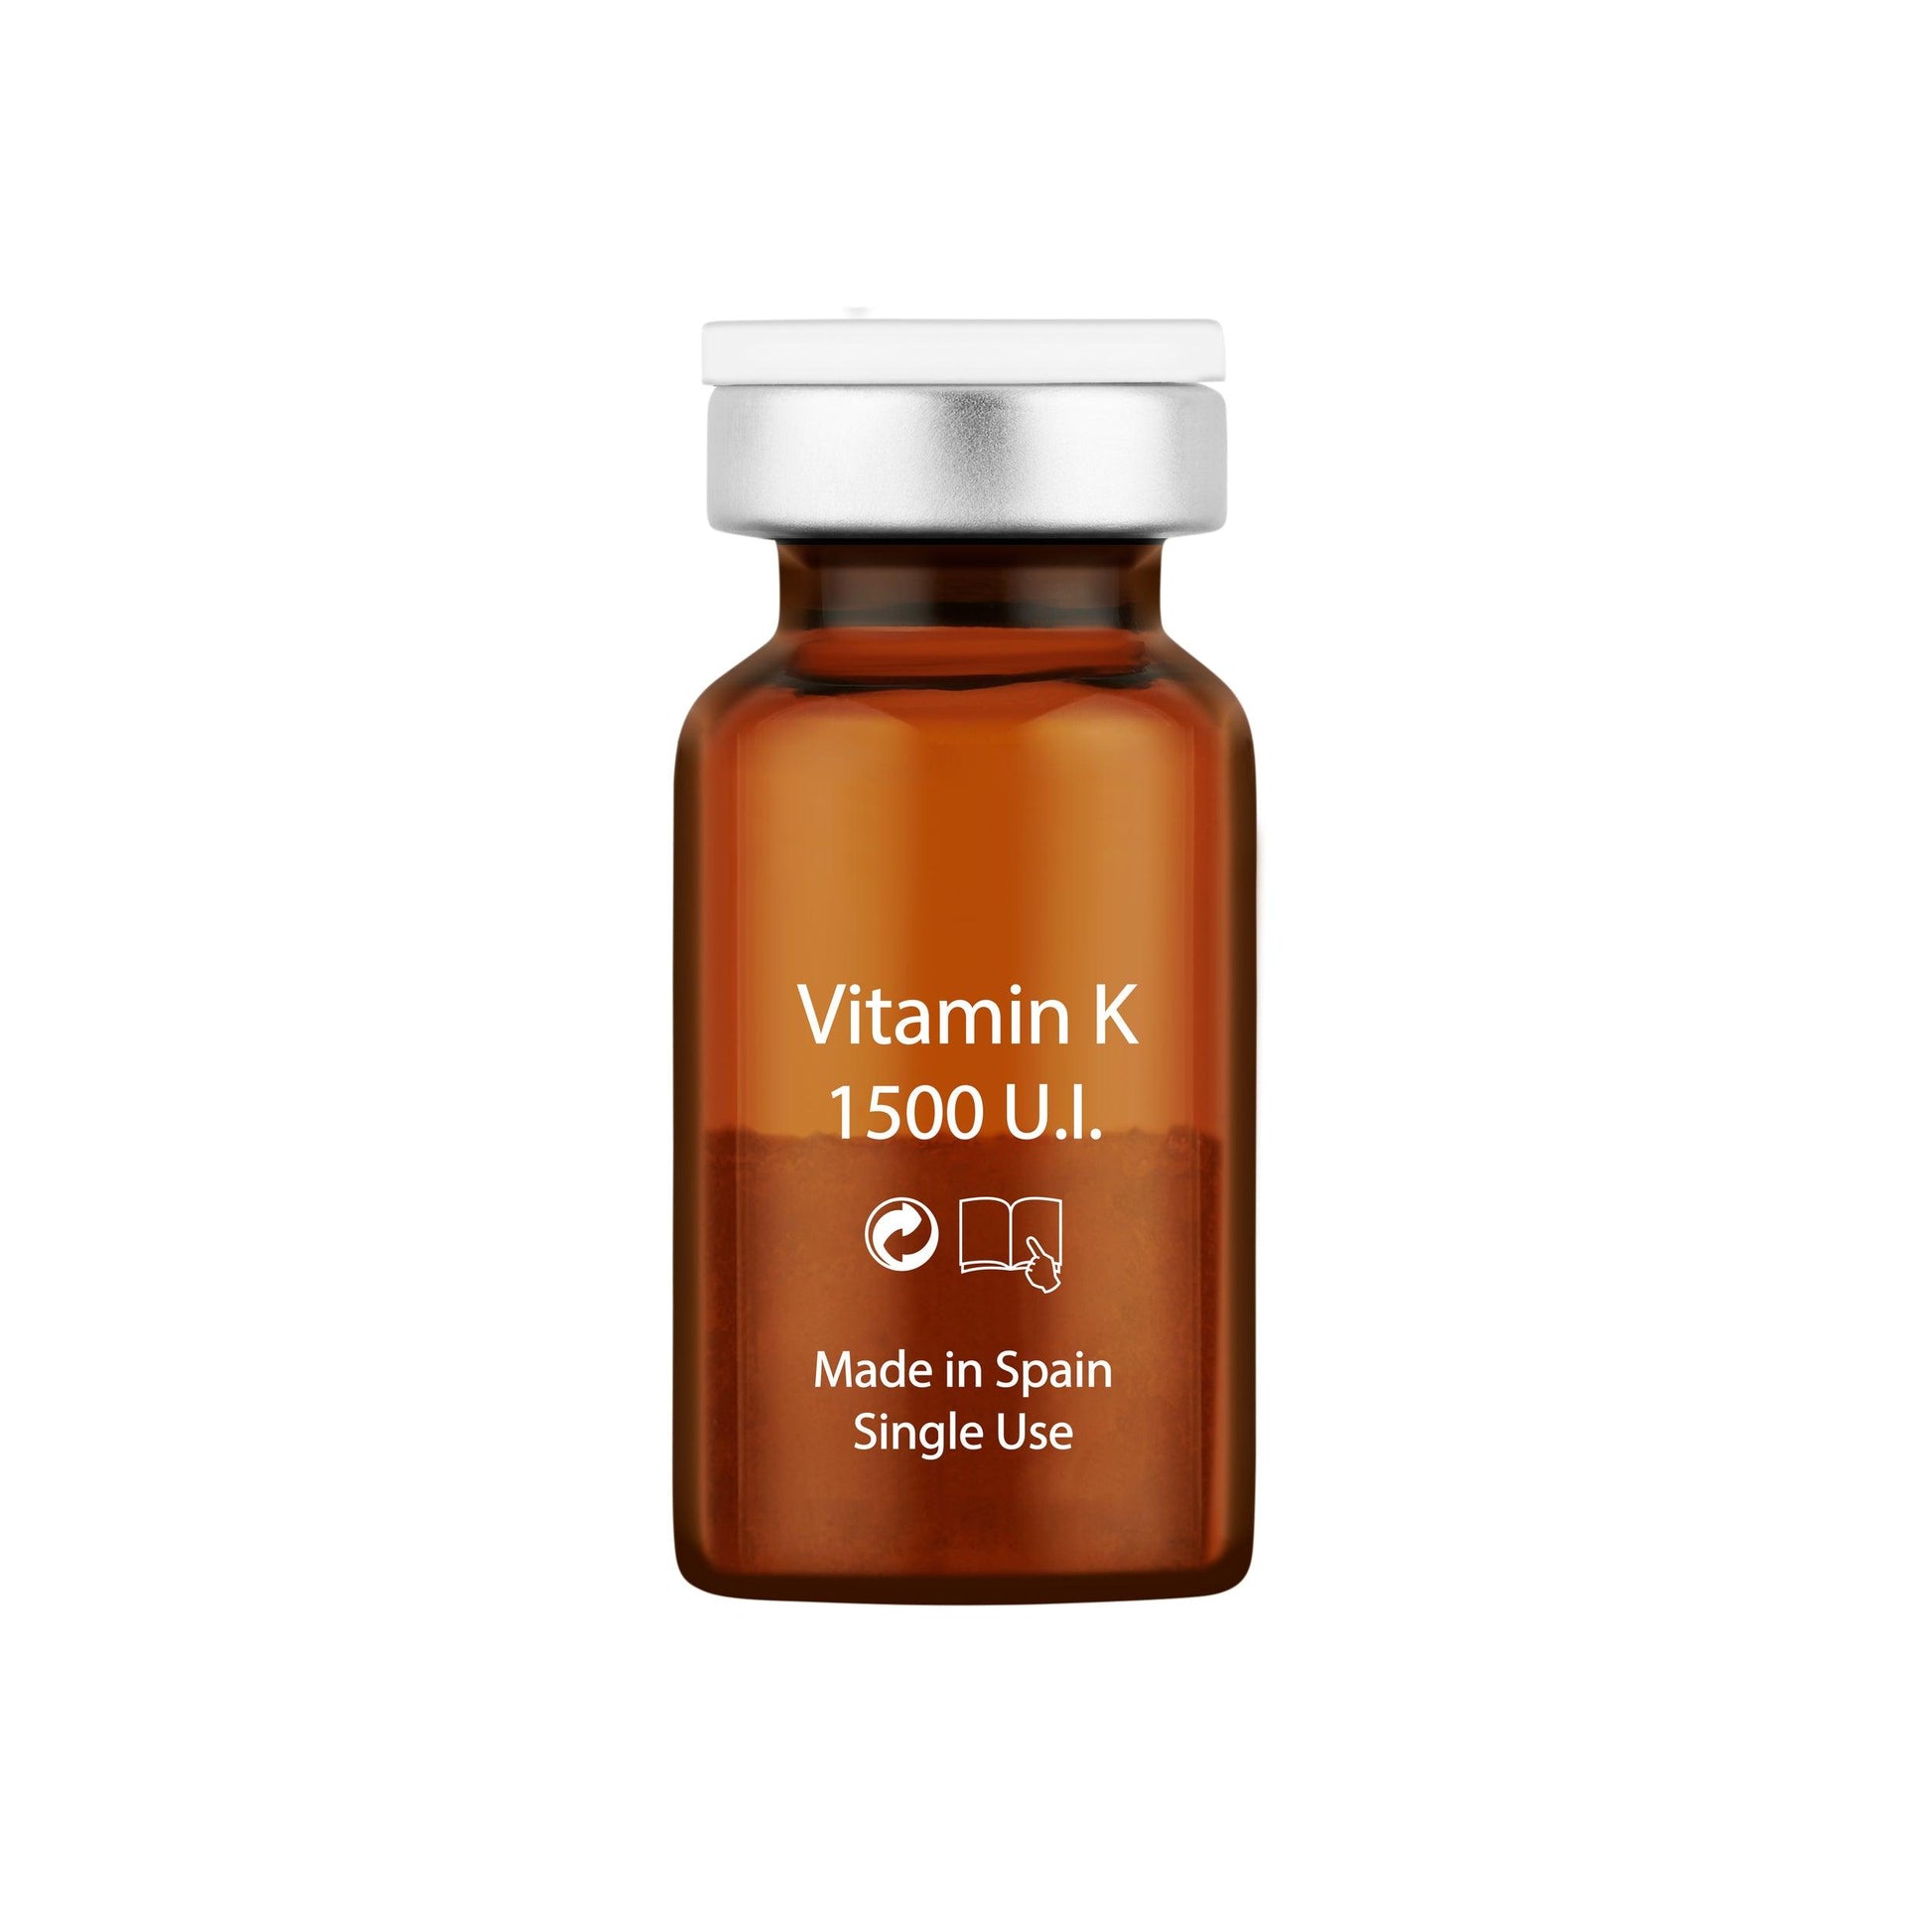 Vitamin K 1500 U.I. - MCCM Medical Cosmetics